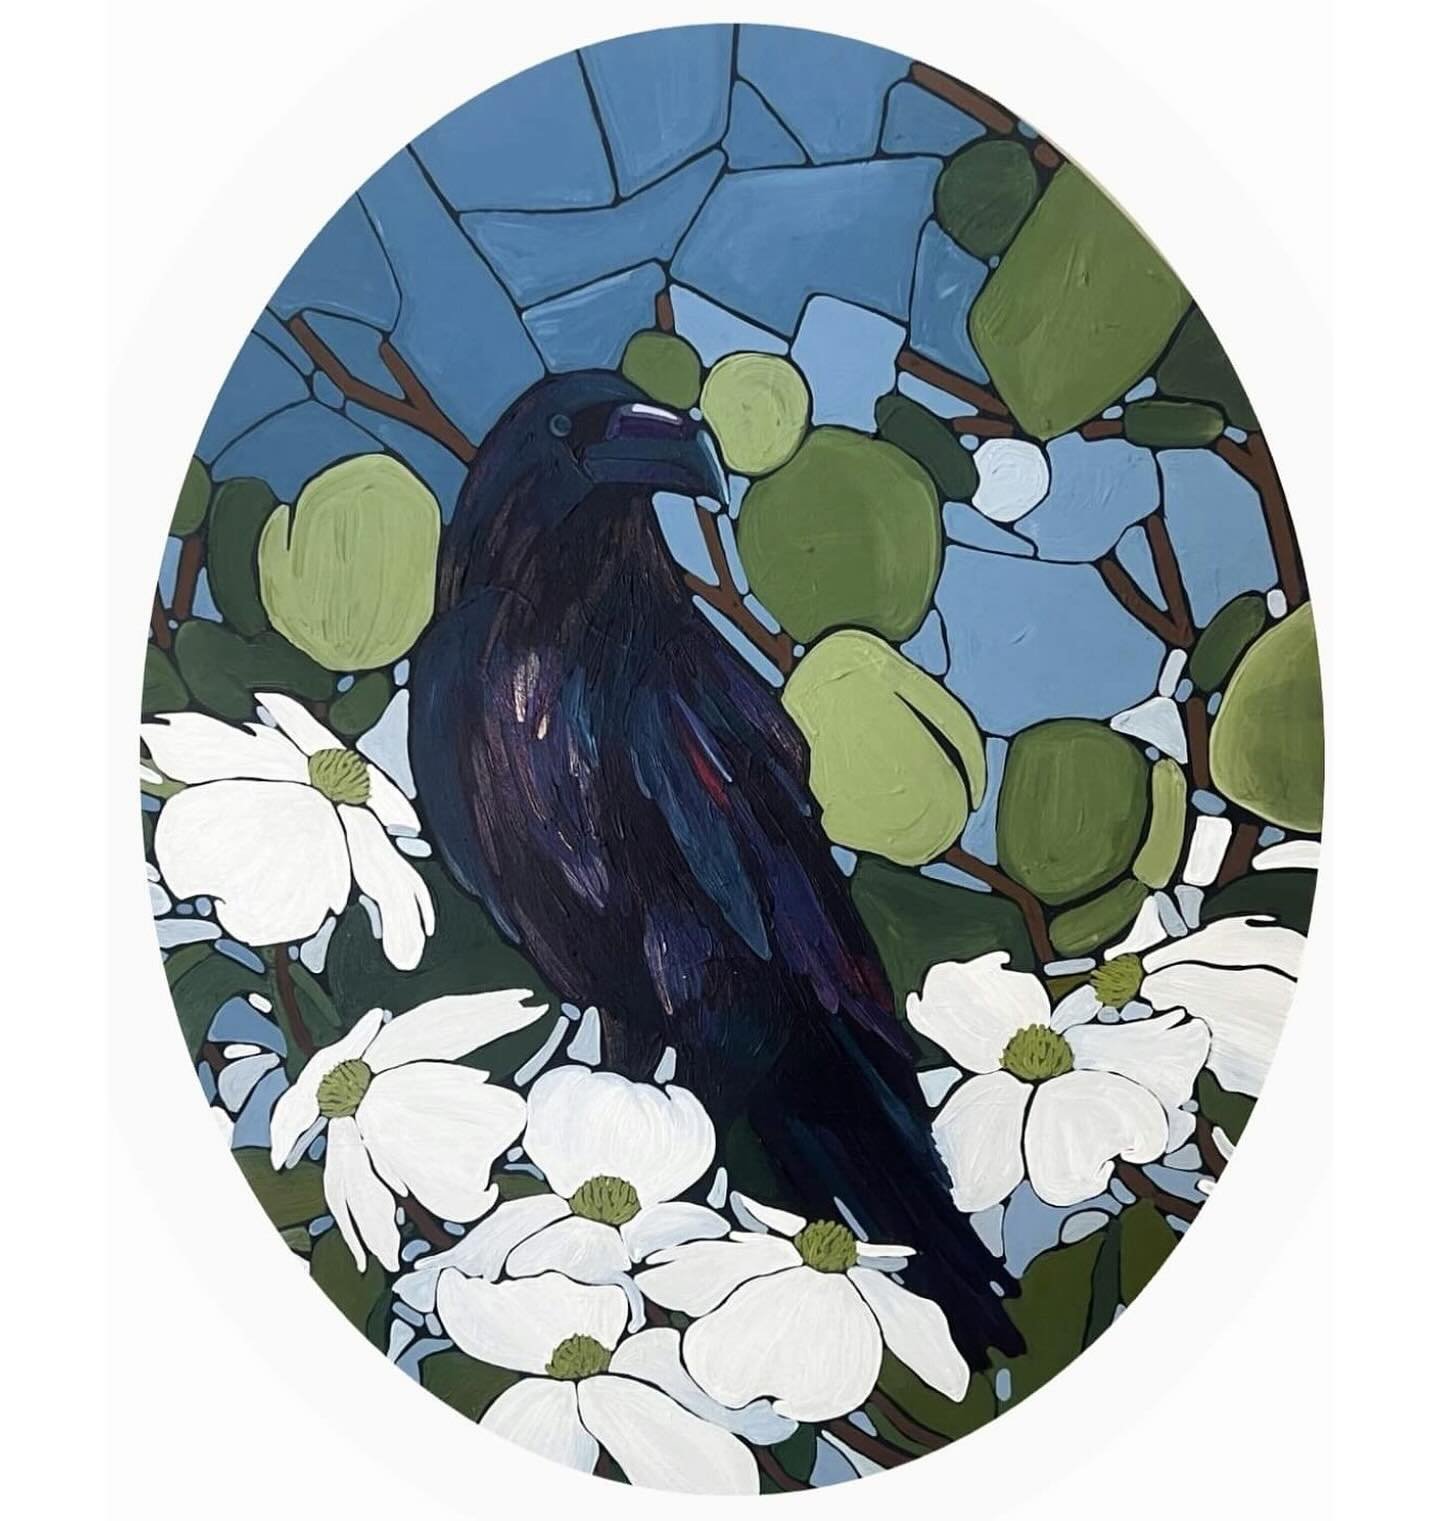 Raven in the Dogwoods. $100
Acrylic on 12x15in wood panel.

#tiarasaficmartinart #acryliconwood #acrylicart #raven #dogwood #virginiadogwood #acrylicart #painting #art #artoftheday #artofinstagram #artistsoninstagram #floral #originalart #art_we_insp